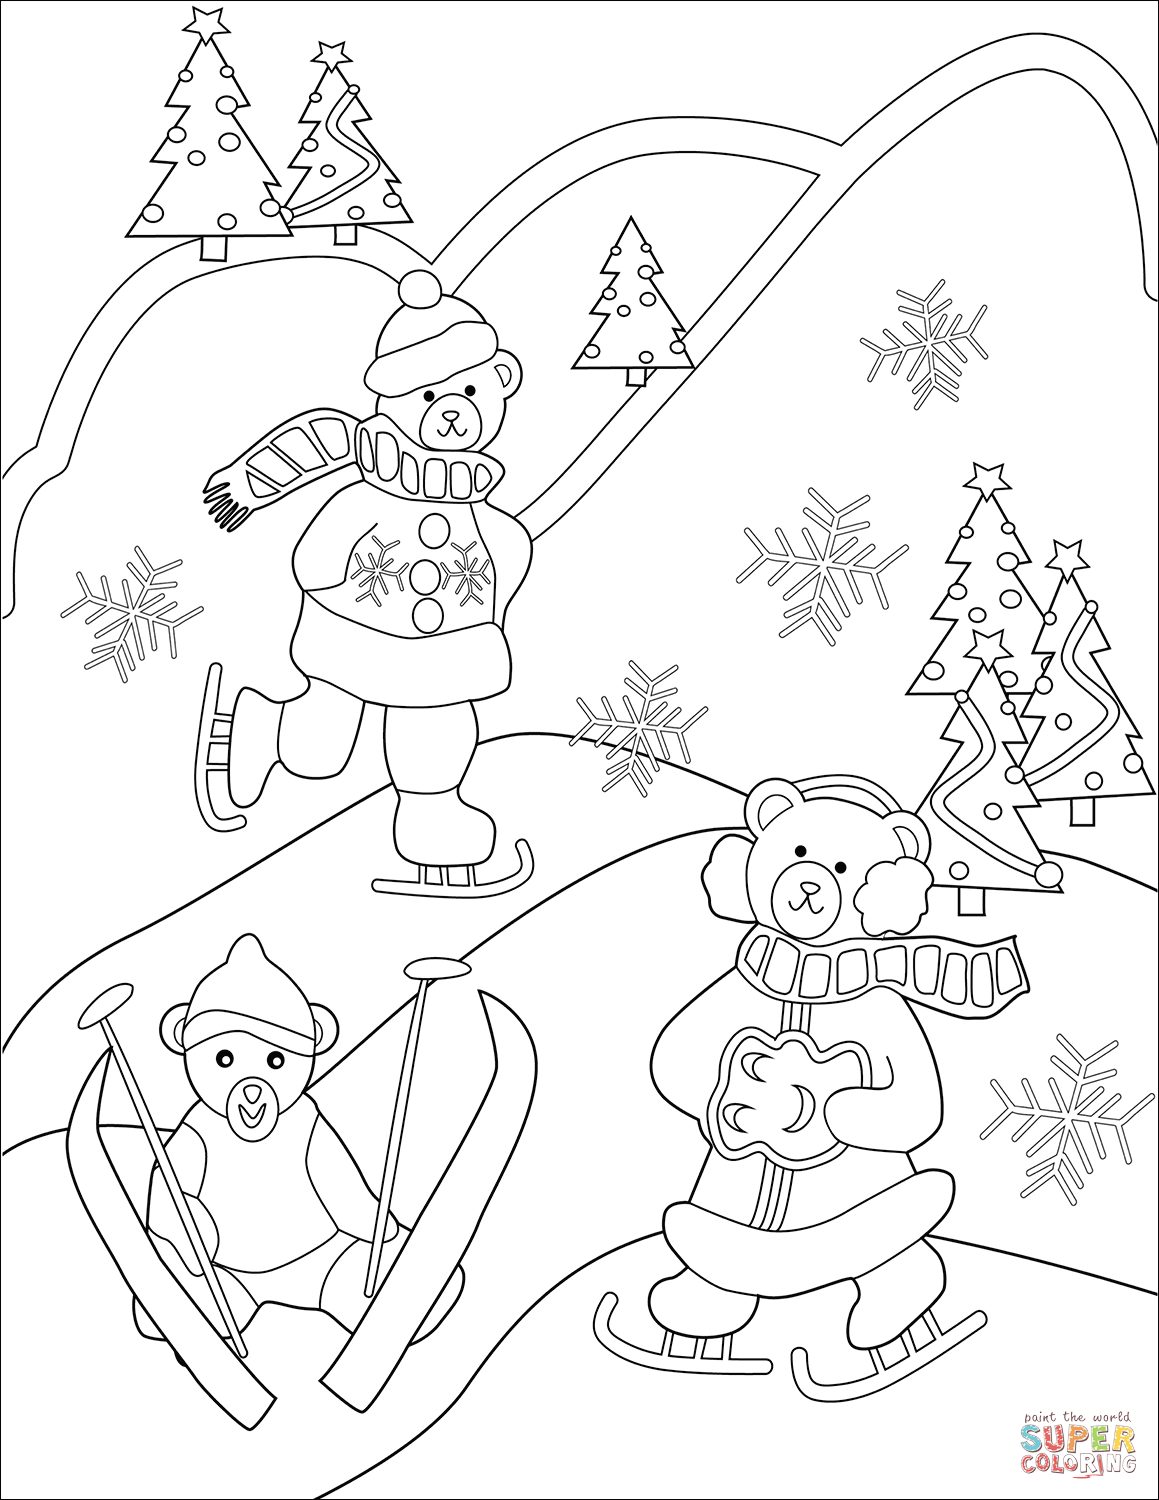 Skating and skiing bears coloring page free printable coloring pages